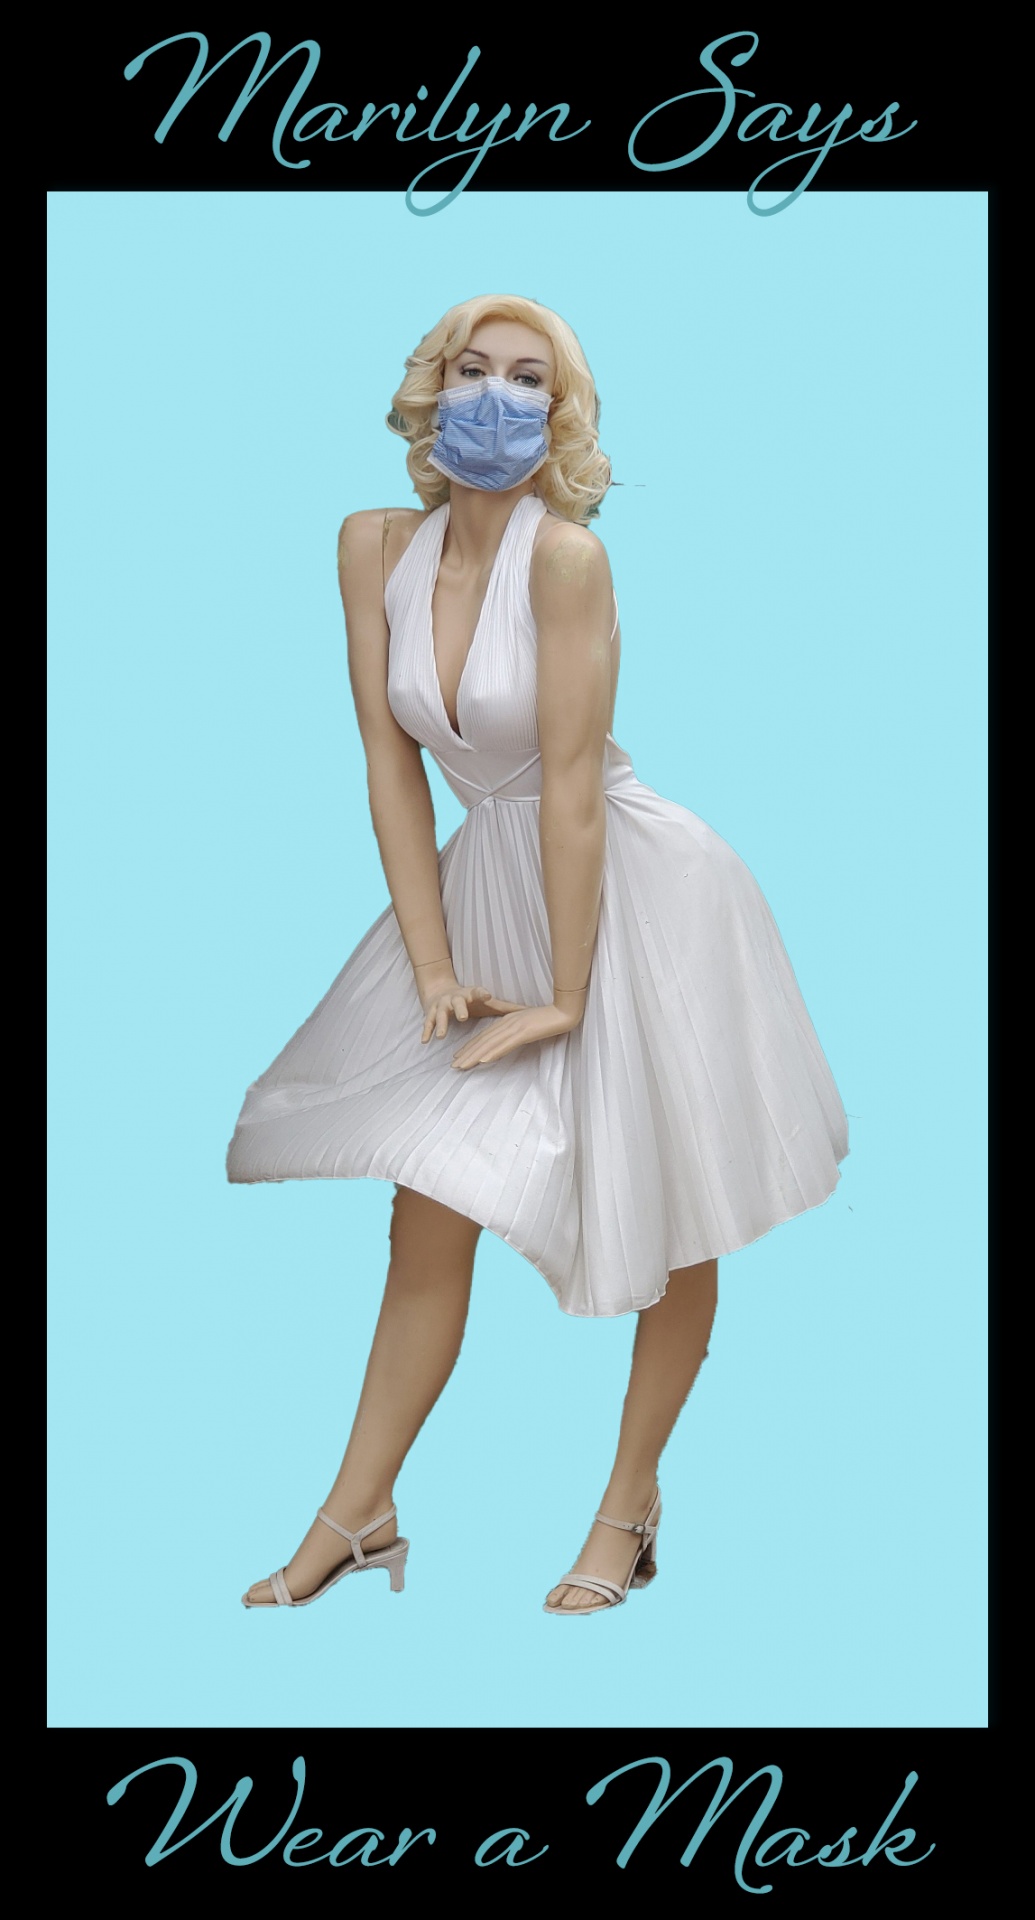 Poster di maschera di Marilyn Monroe